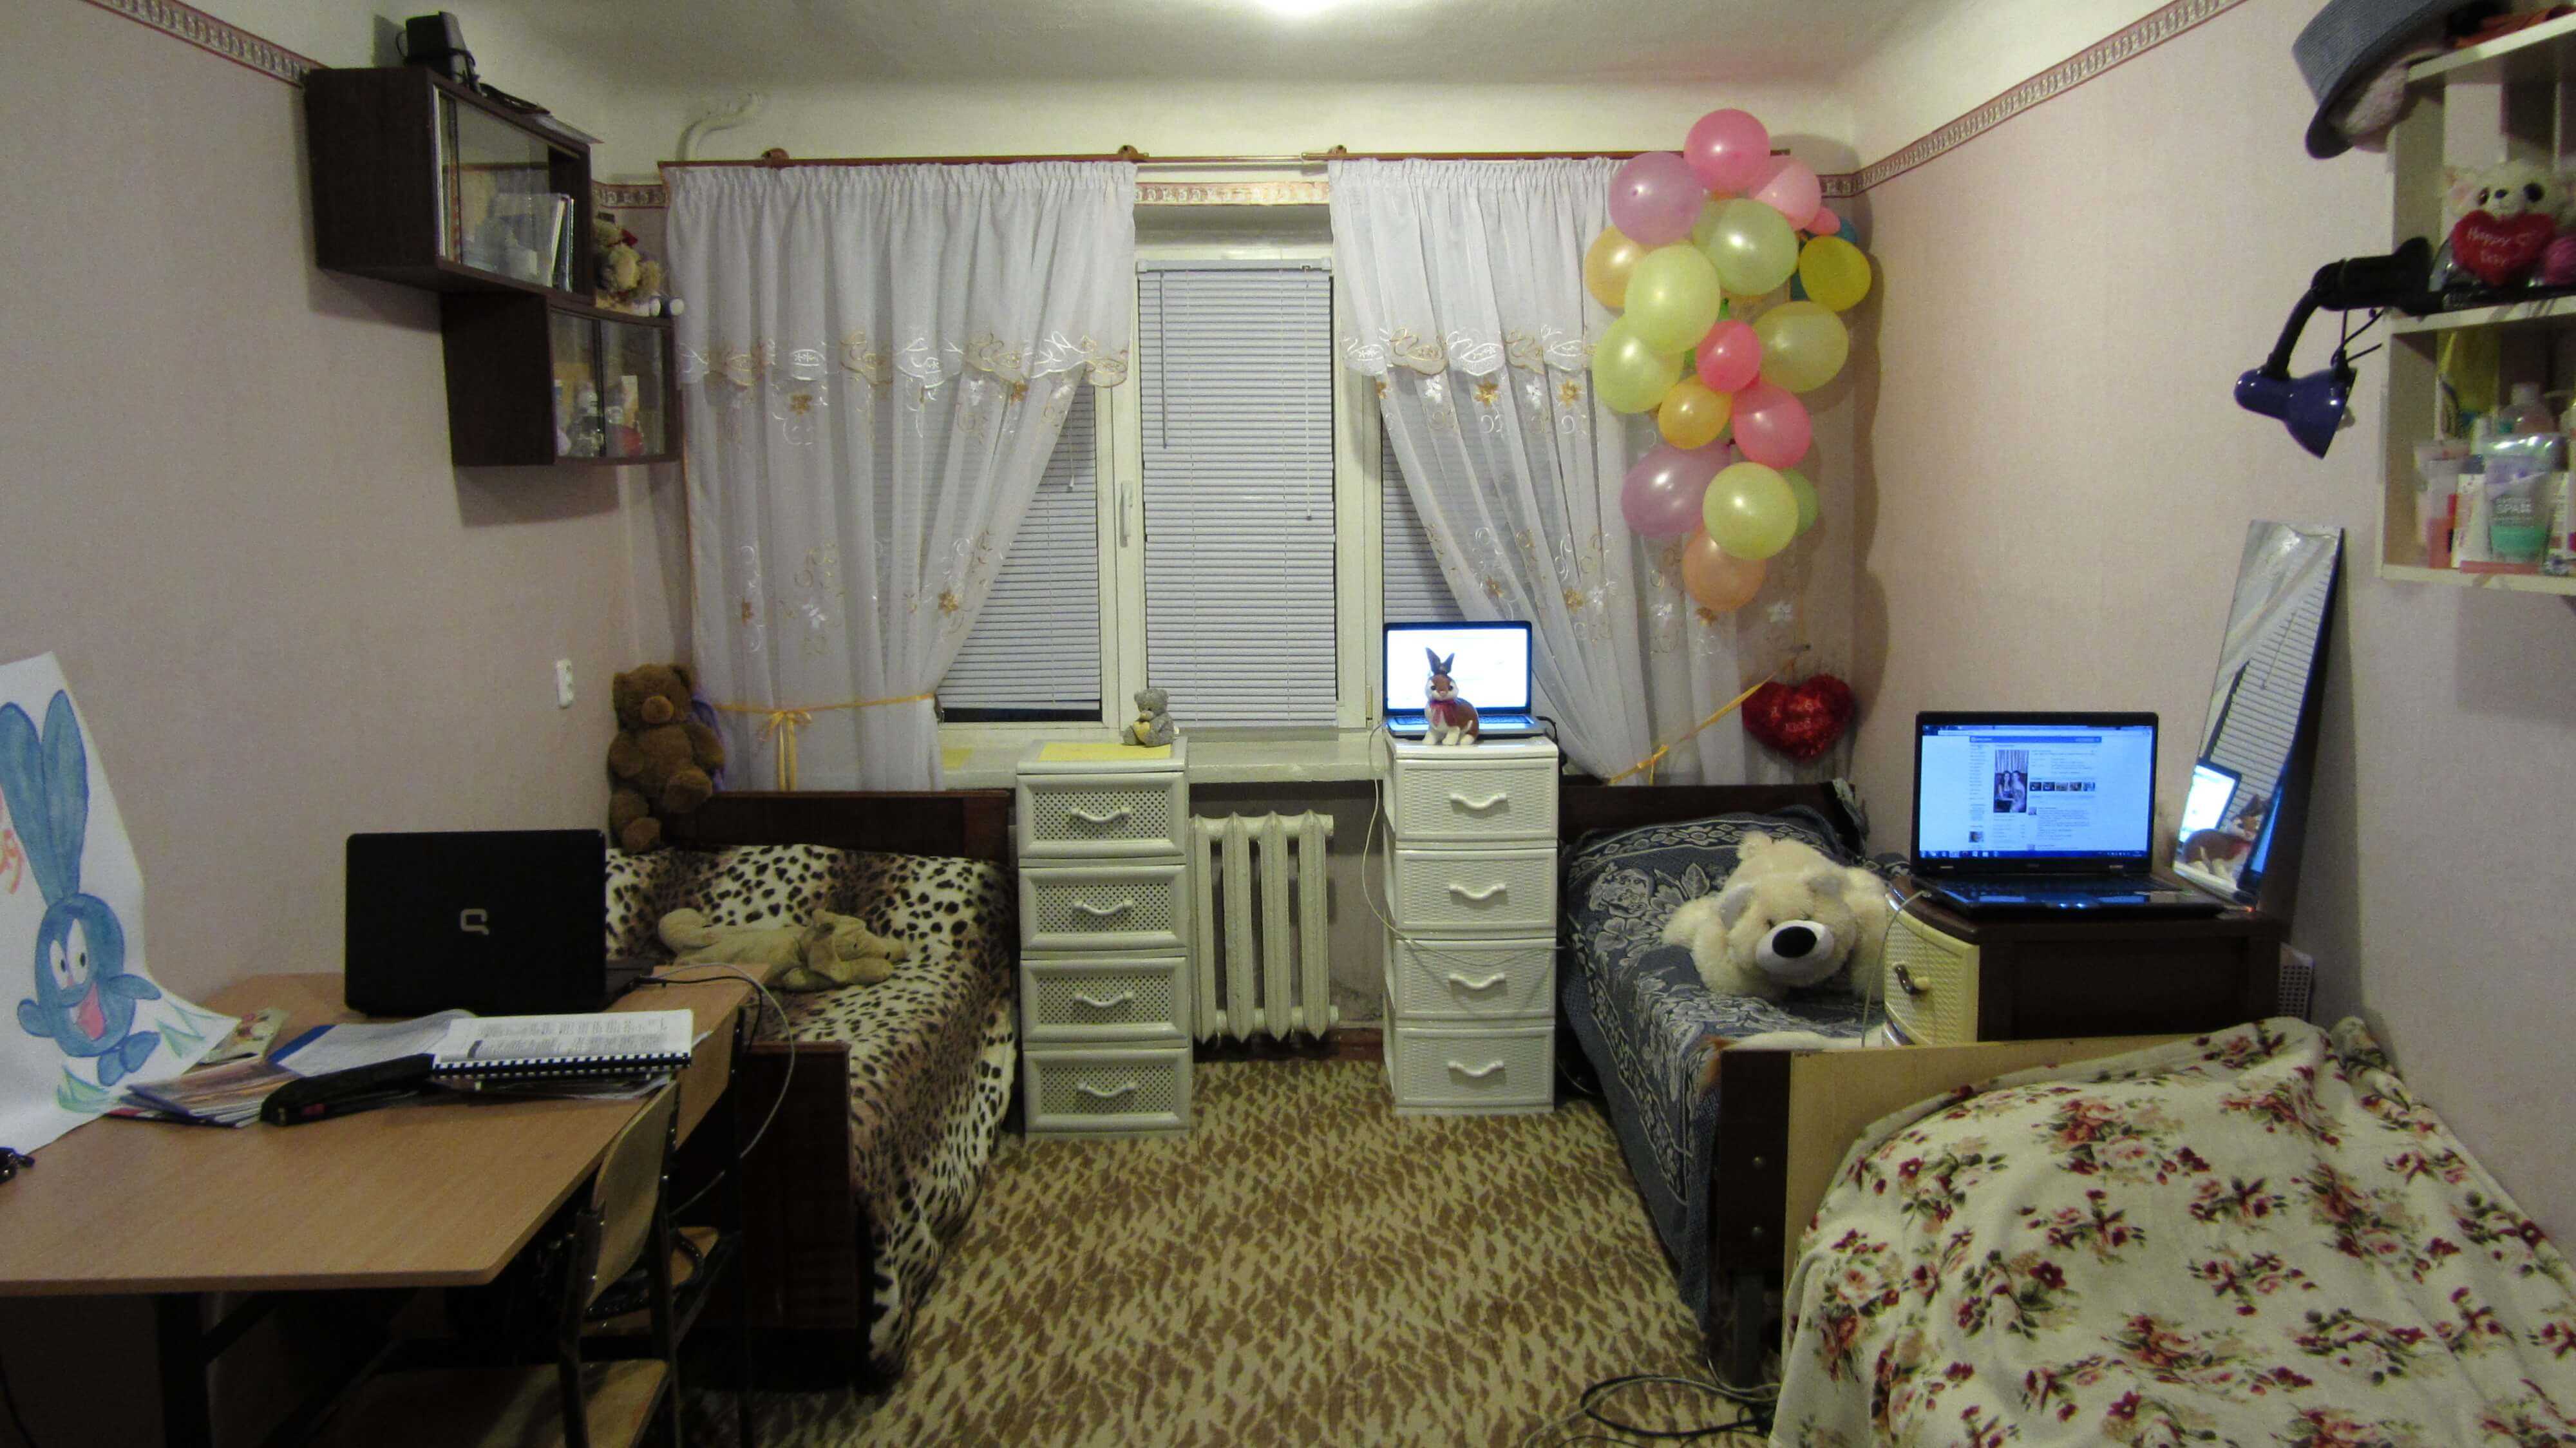 variant of the bright dormitory decor